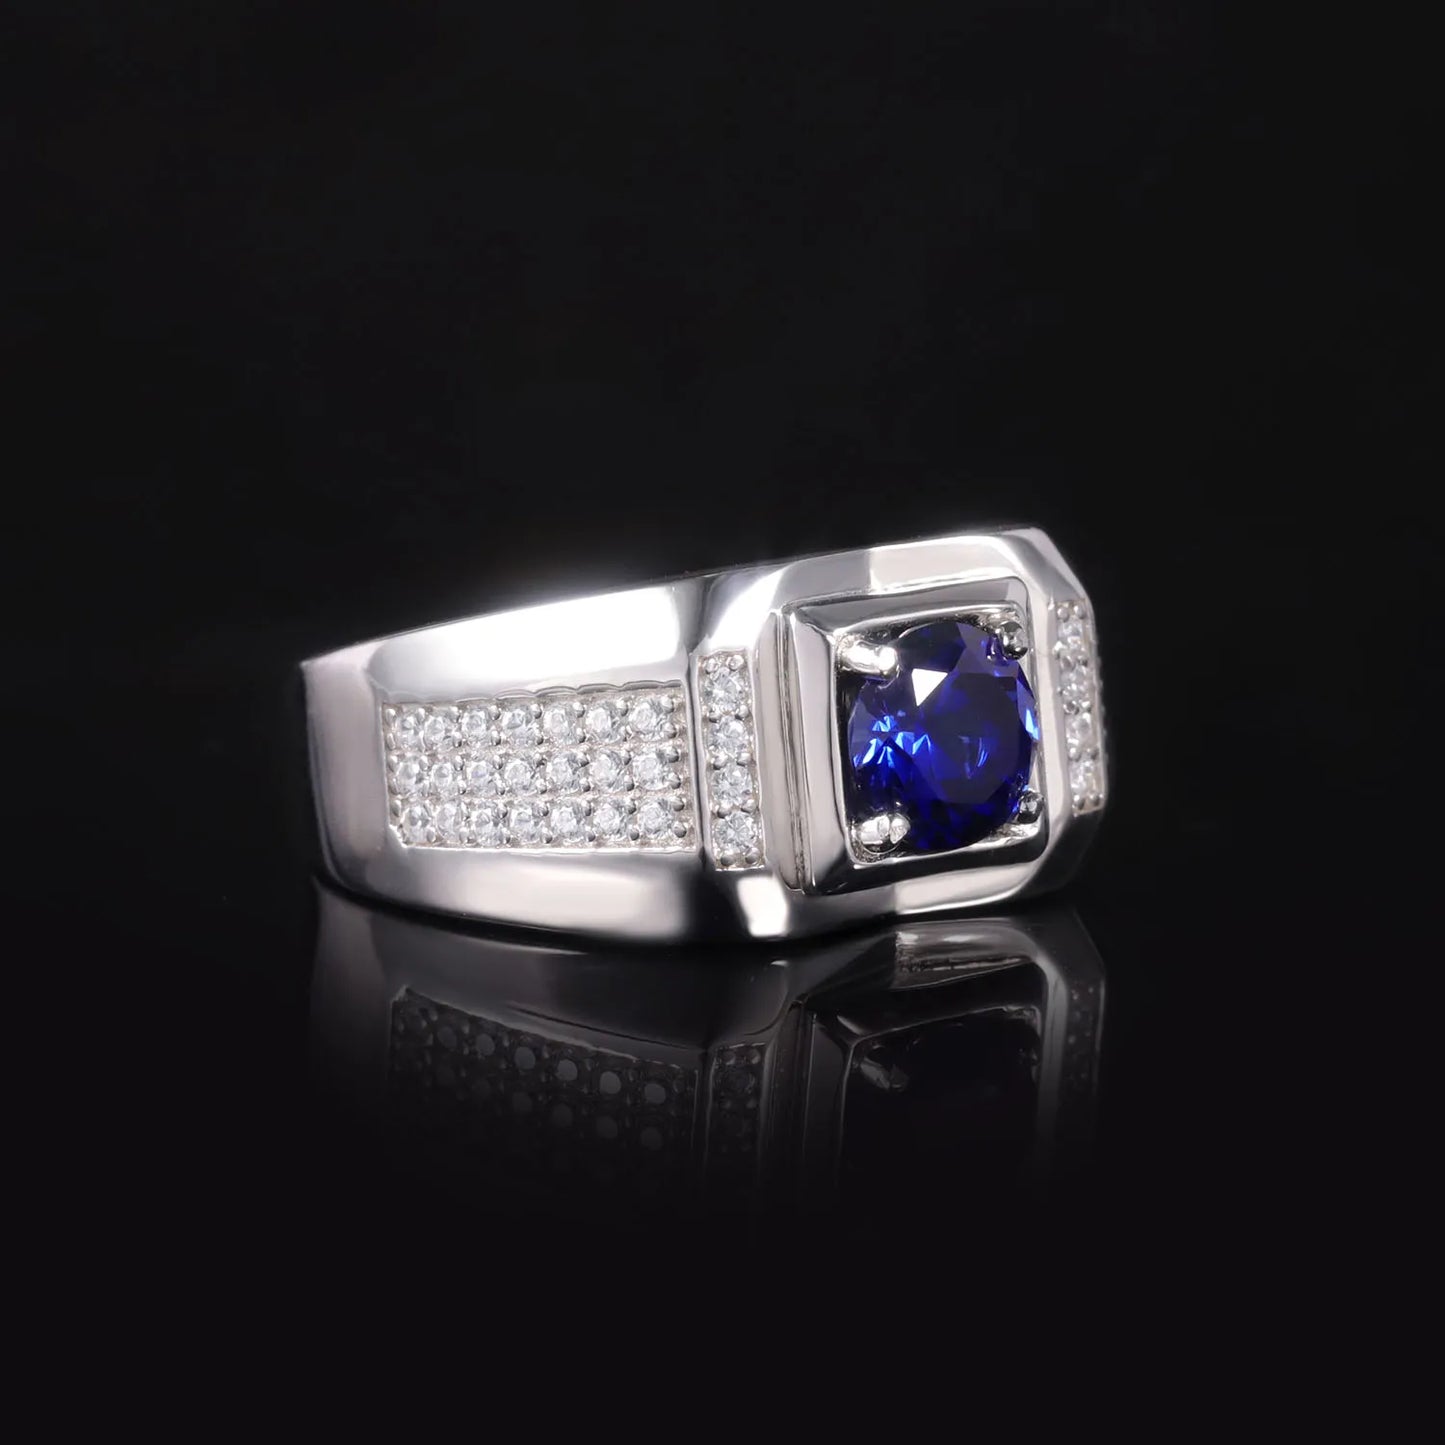 GEM'S BALLET 925 Sterling Silver Blue Sapphire Ring For Men Wedding 6.5mm 1.37Ct Round Lab Grown Sapphire Men's Statement Ring